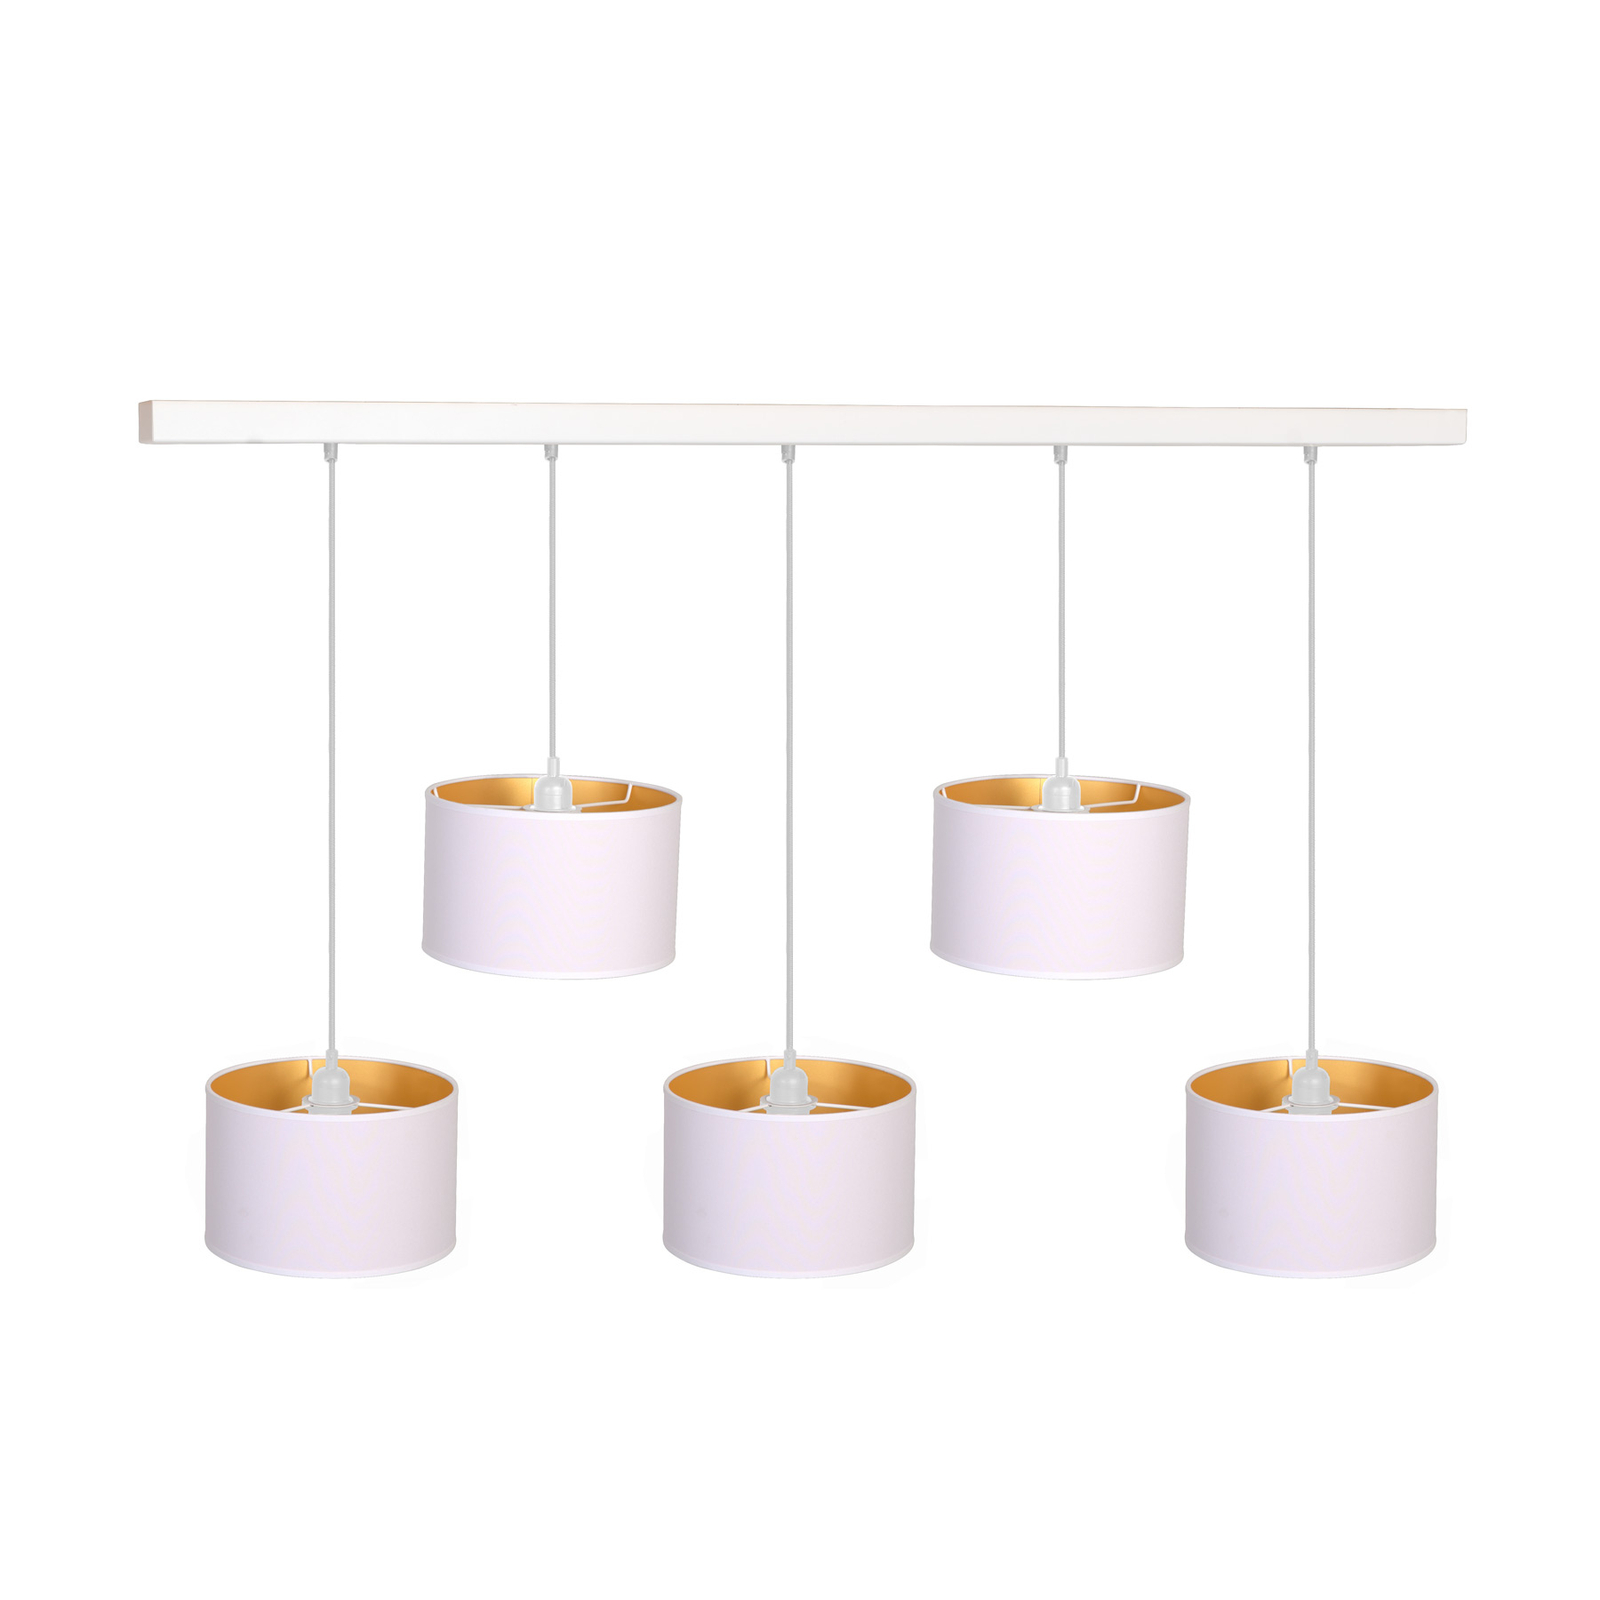 Hanglamp Roller wit/goud, Ø25cm, 5-lamps